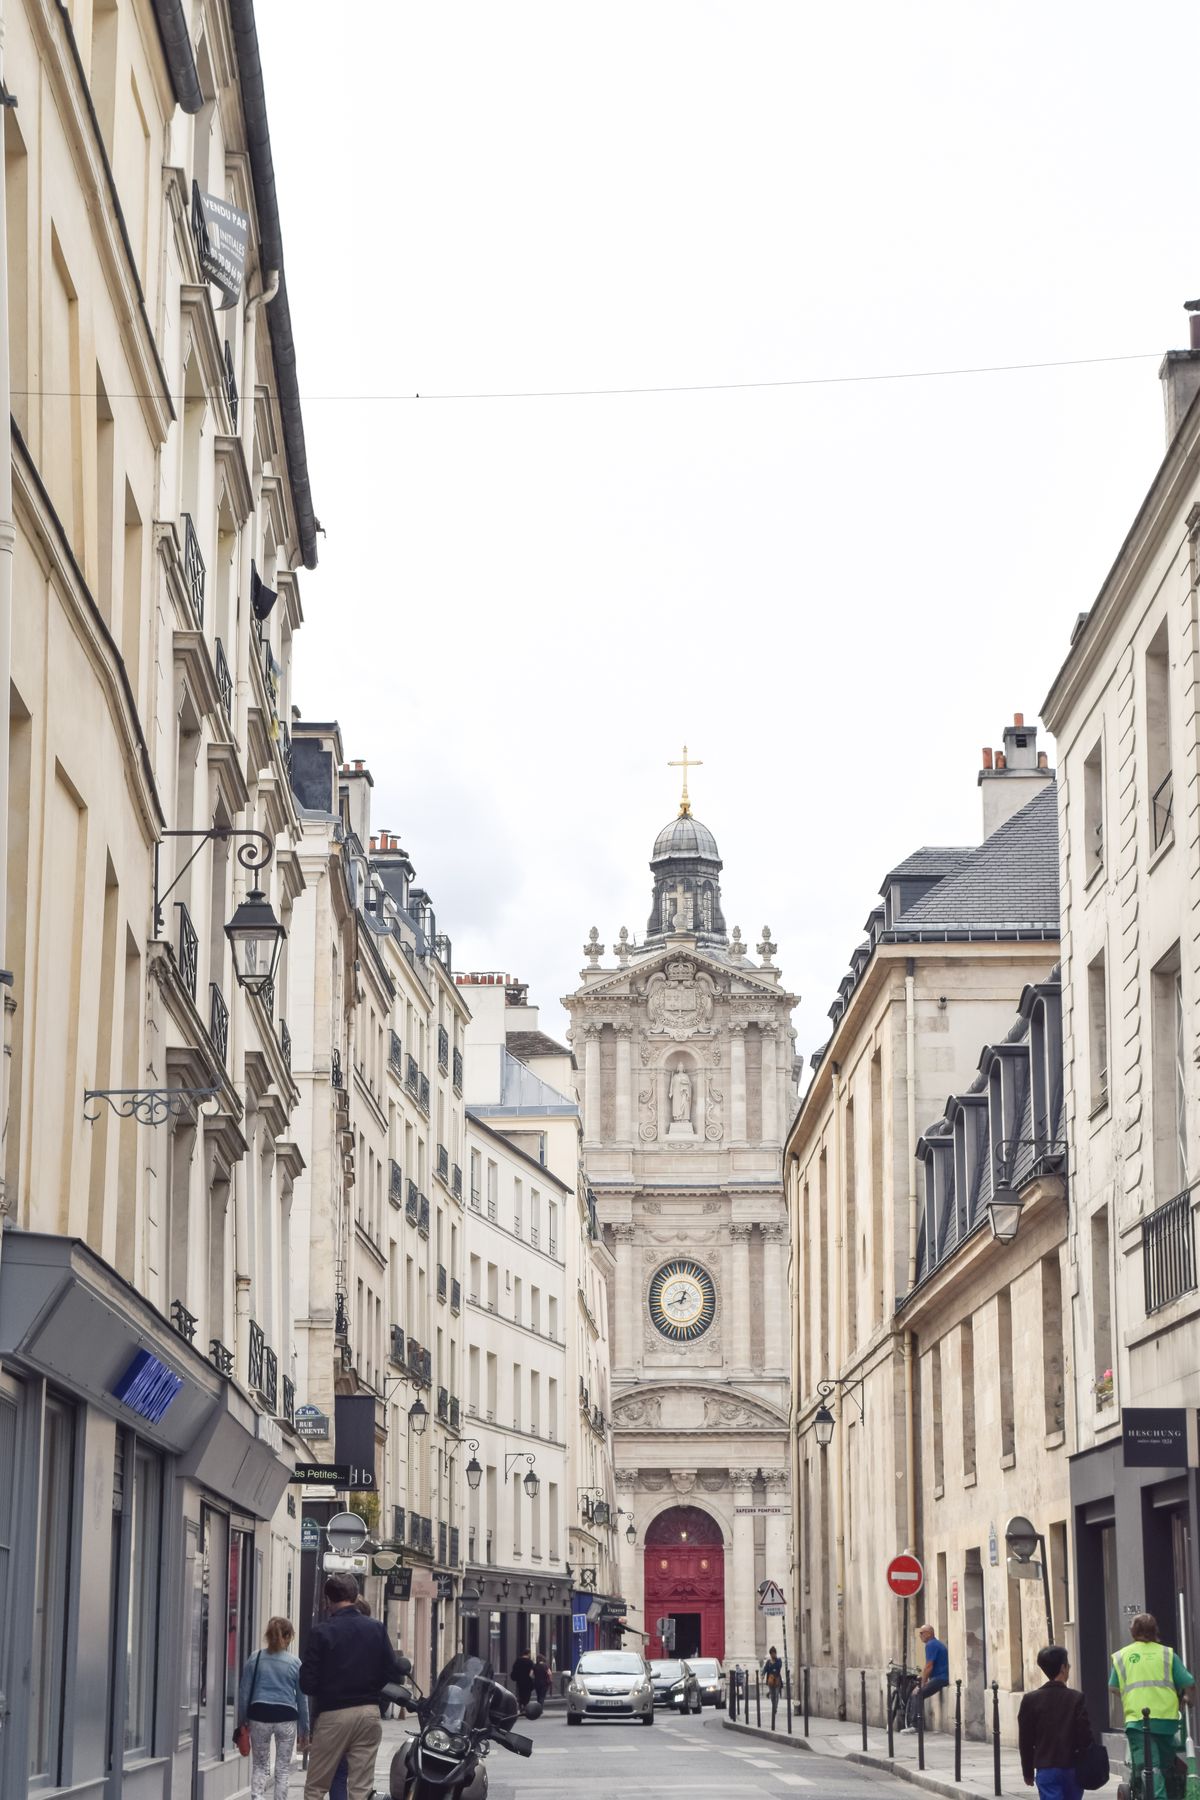 Le Marais Paris: Your Guide to this Fashionable Neighborhood